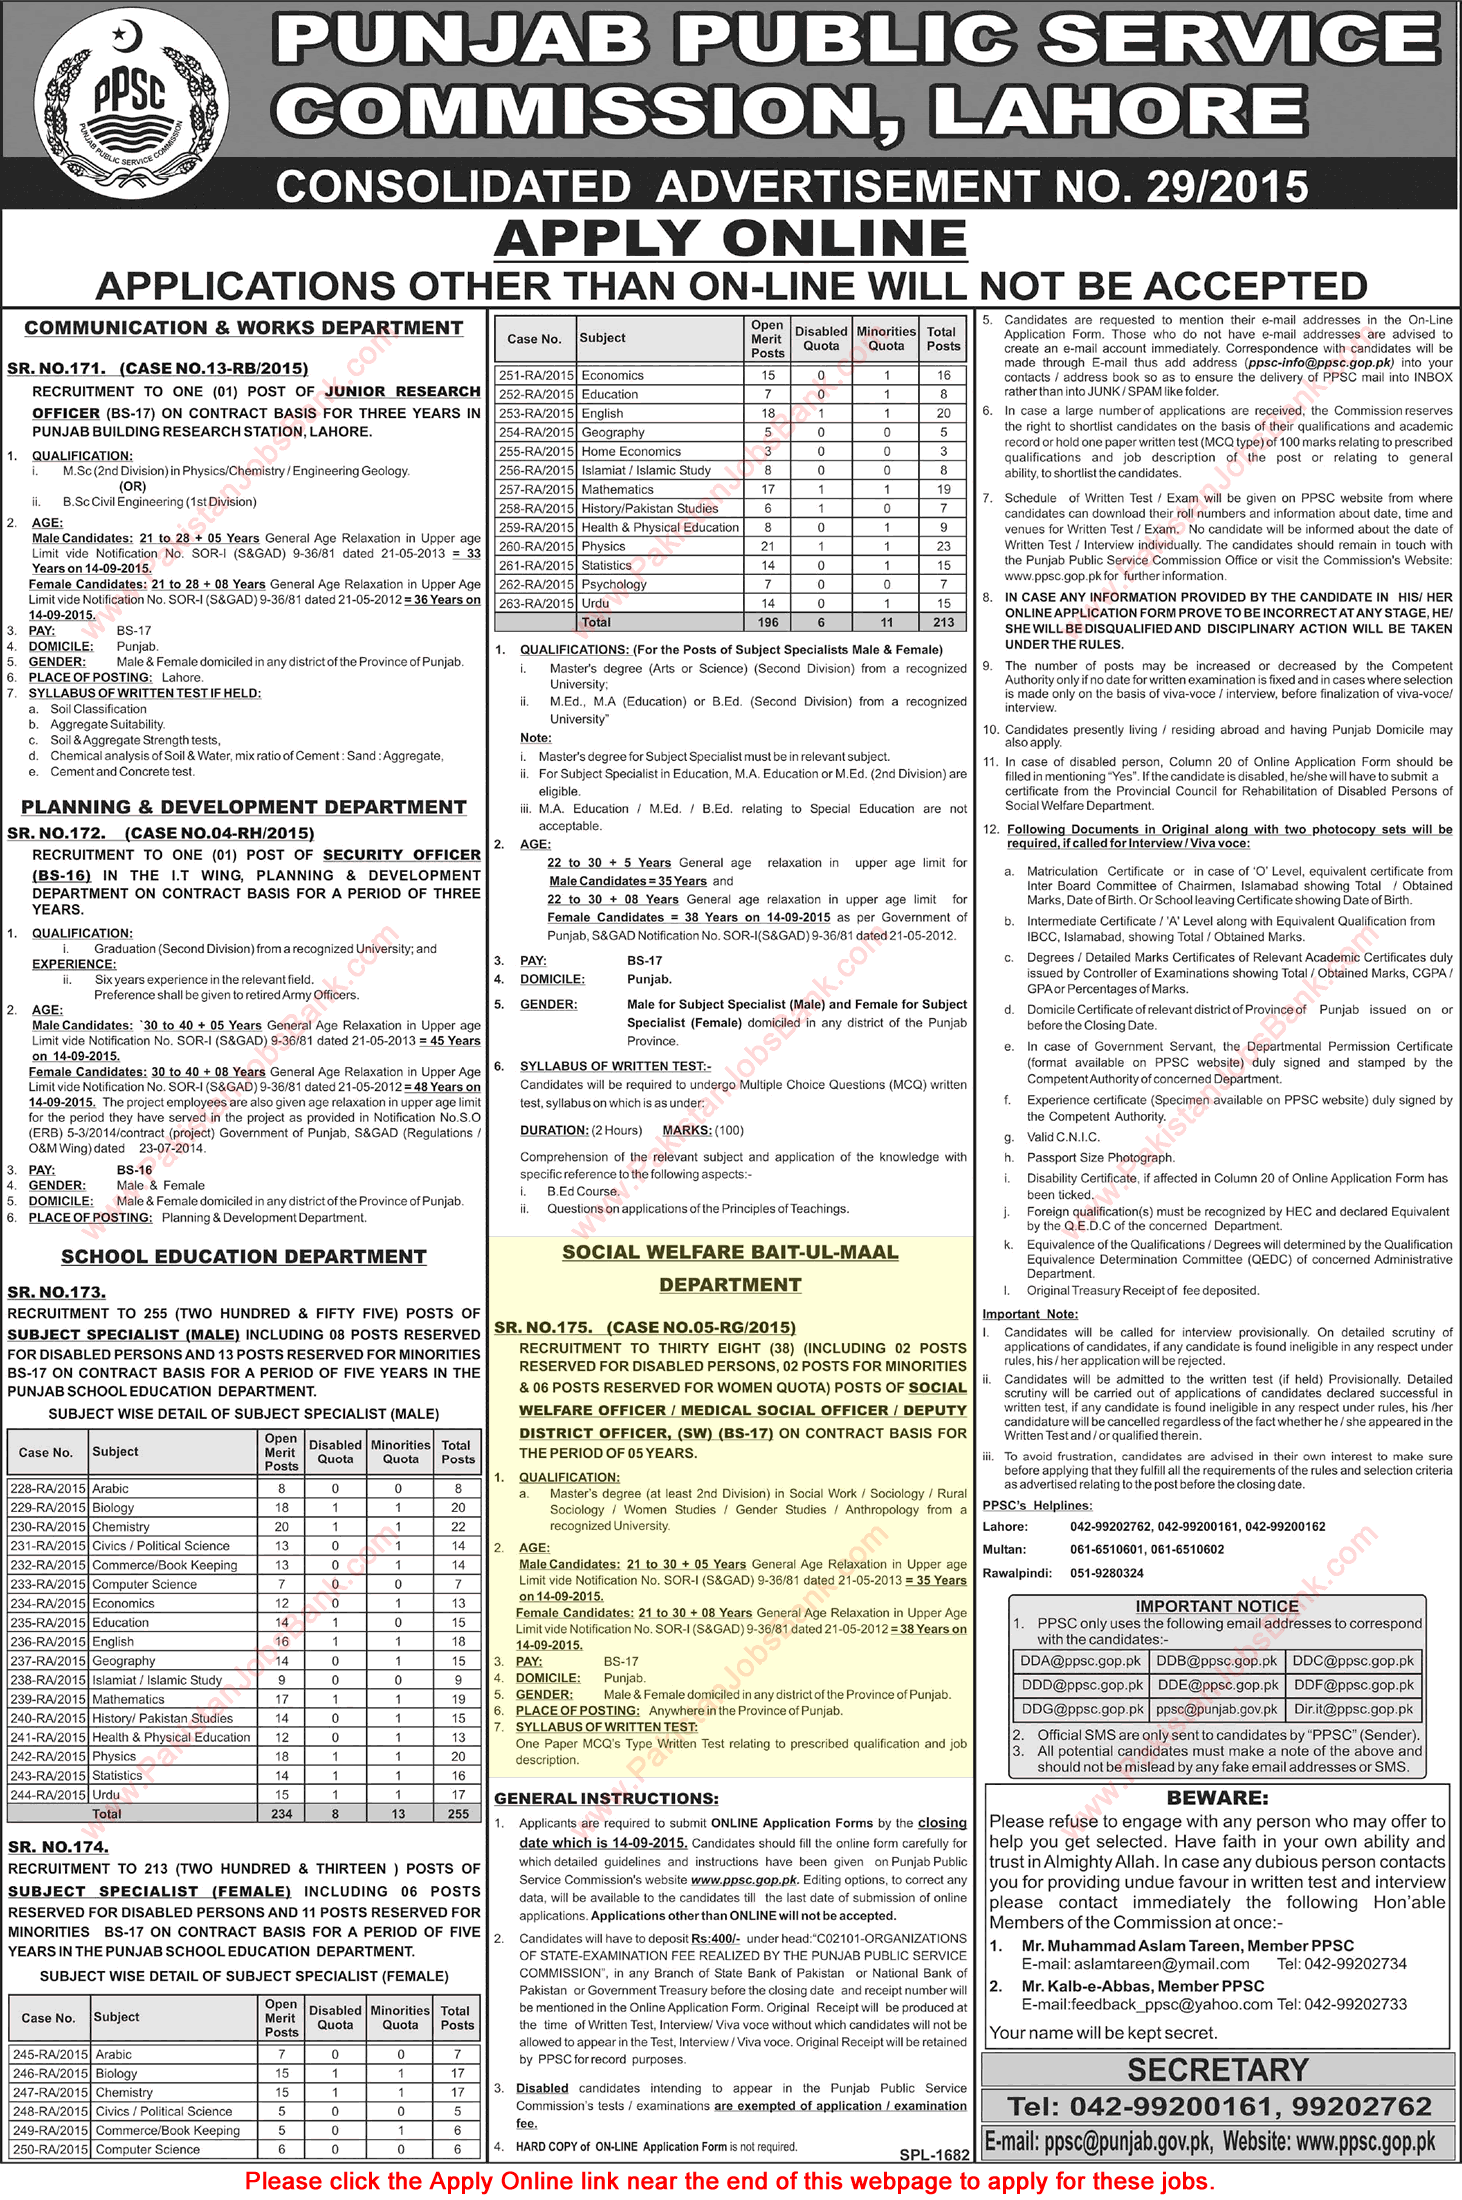 Punjab Social Welfare Department Bait-ul-Maal Jobs 2015 August / September PPSC Online Apply Latest